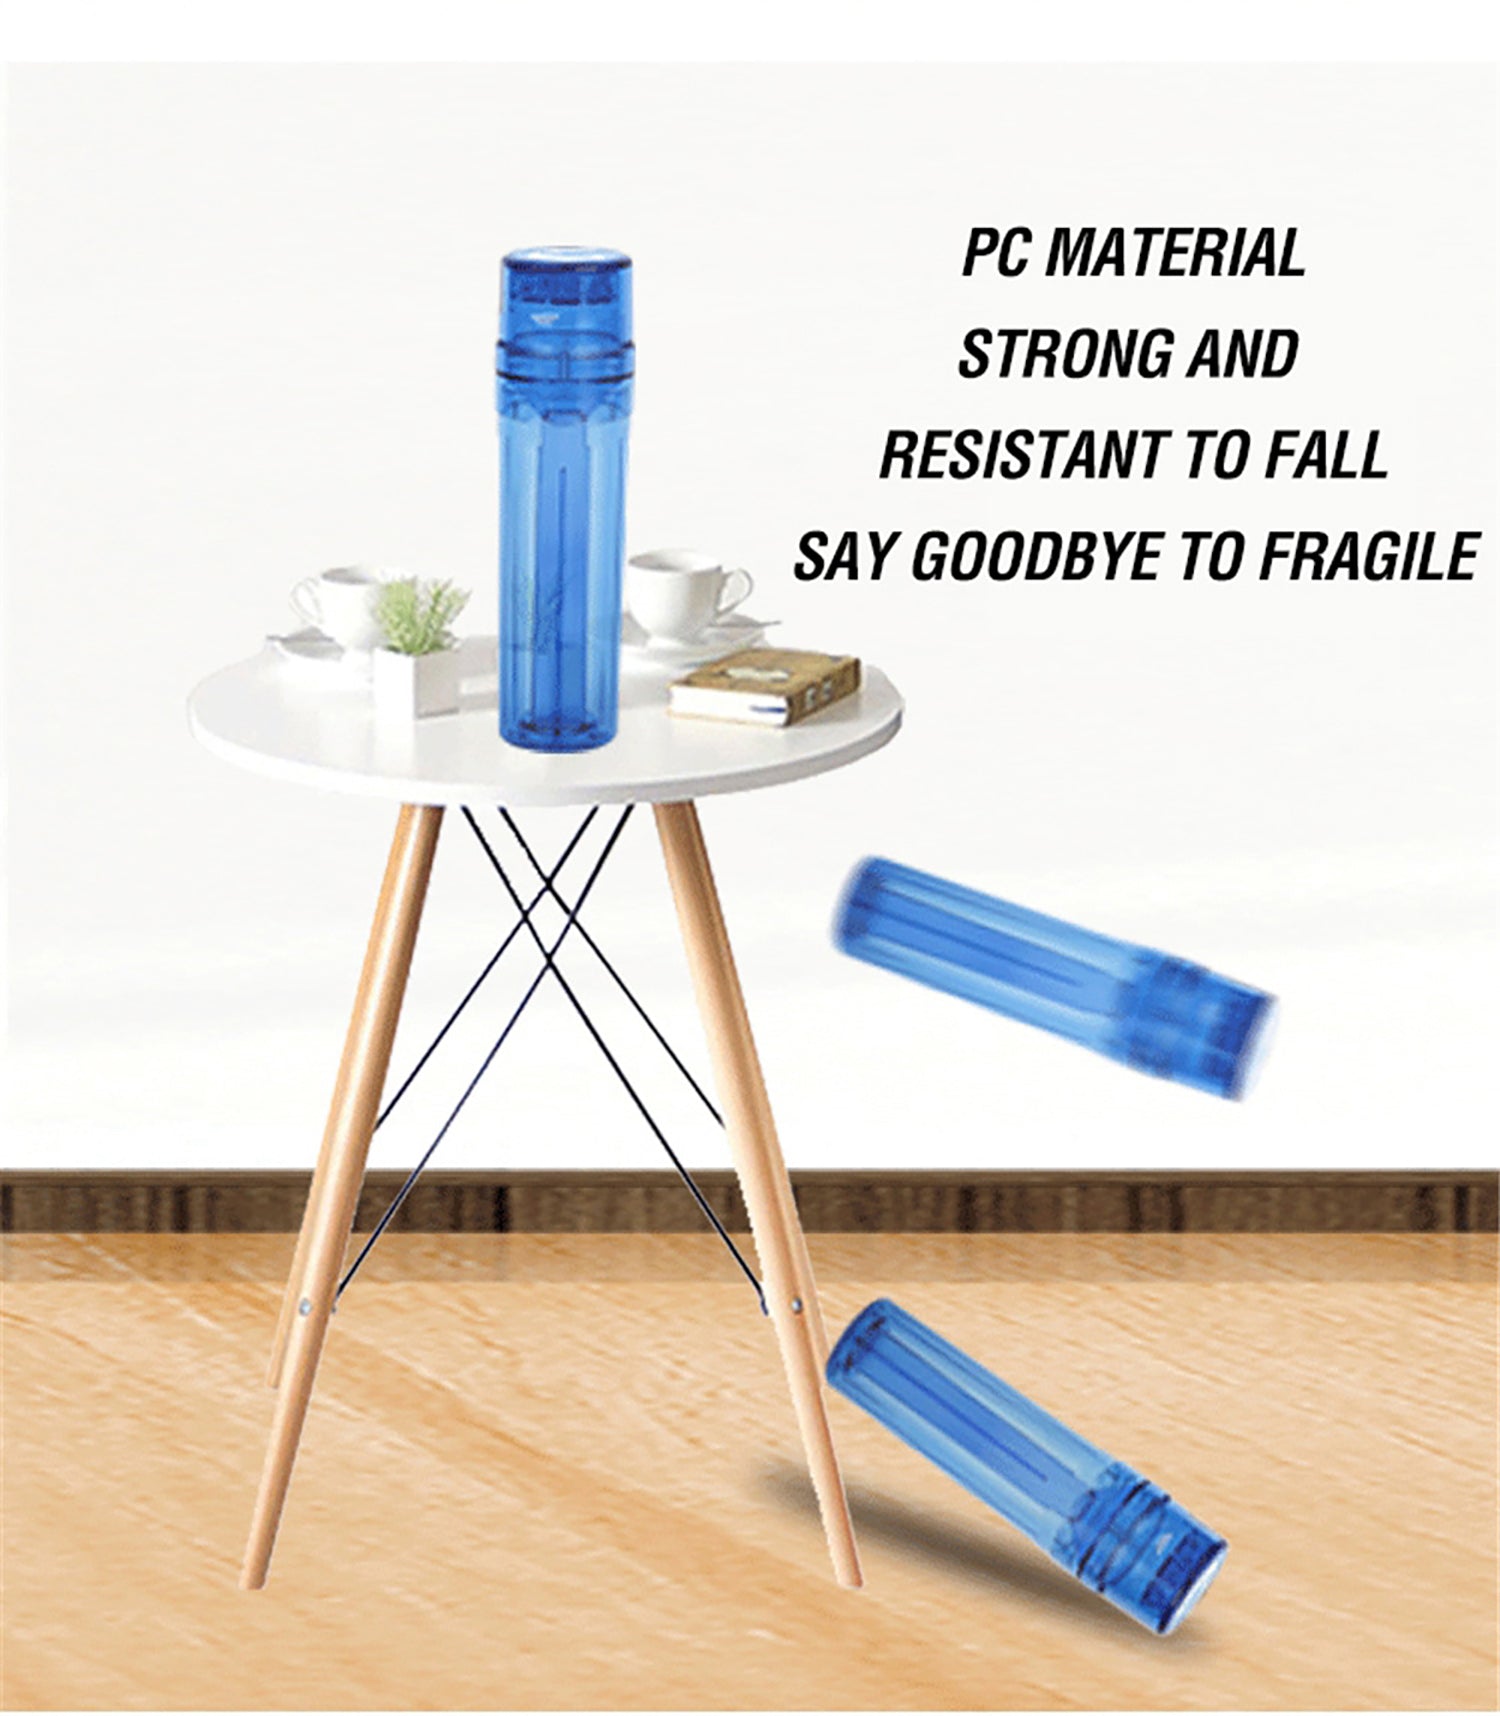 Longmada Plastic Manual Grinder for Tobacco, Blue (1 Pcs)